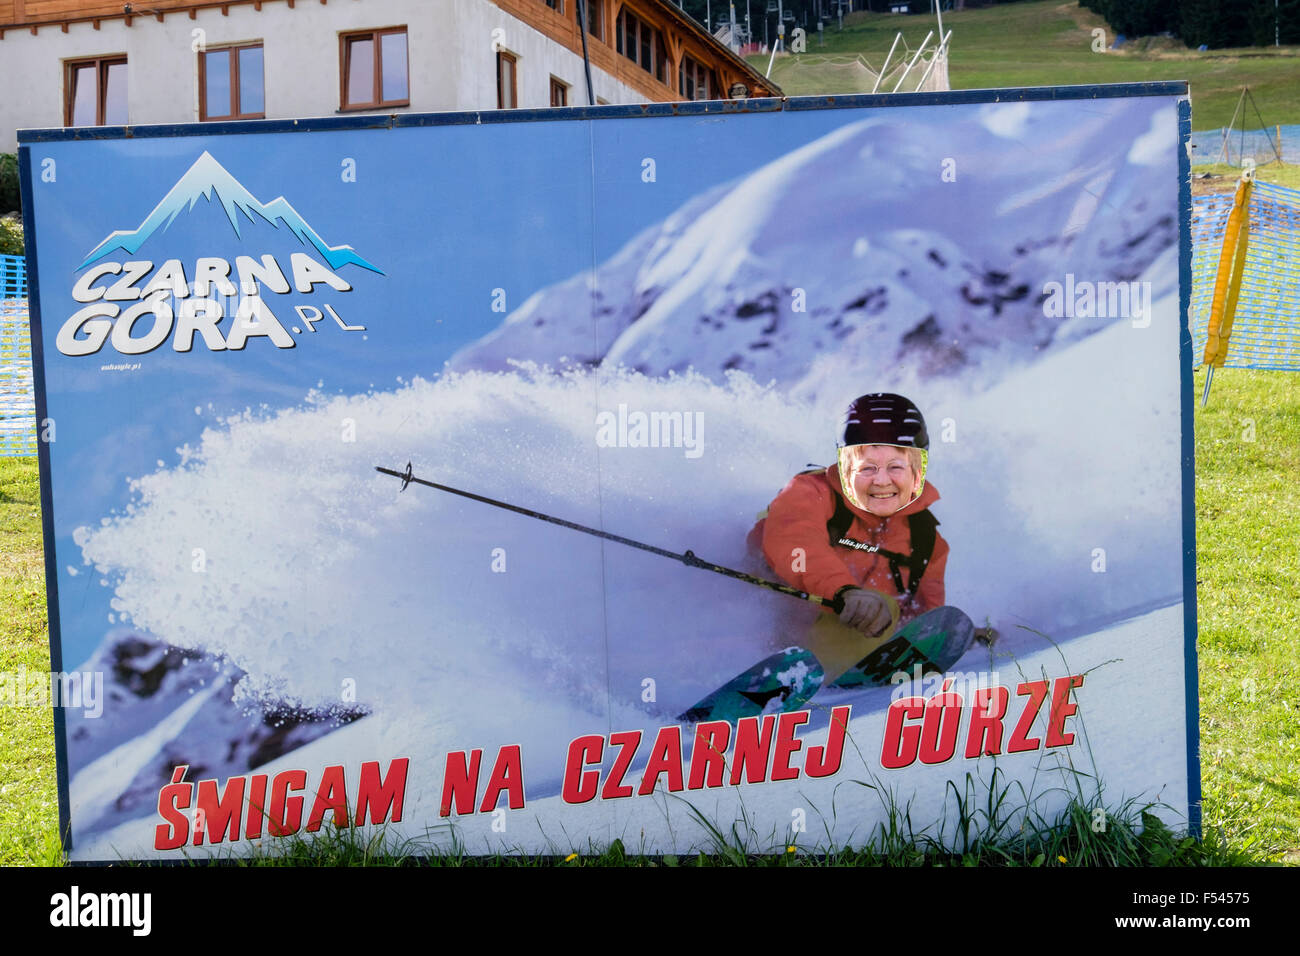 Woman posing as a skier in a skiing poster for Czarna Gora (Black Mountain) ski resort in Snieznicki Park Krajobrazowy. Poland Stock Photo